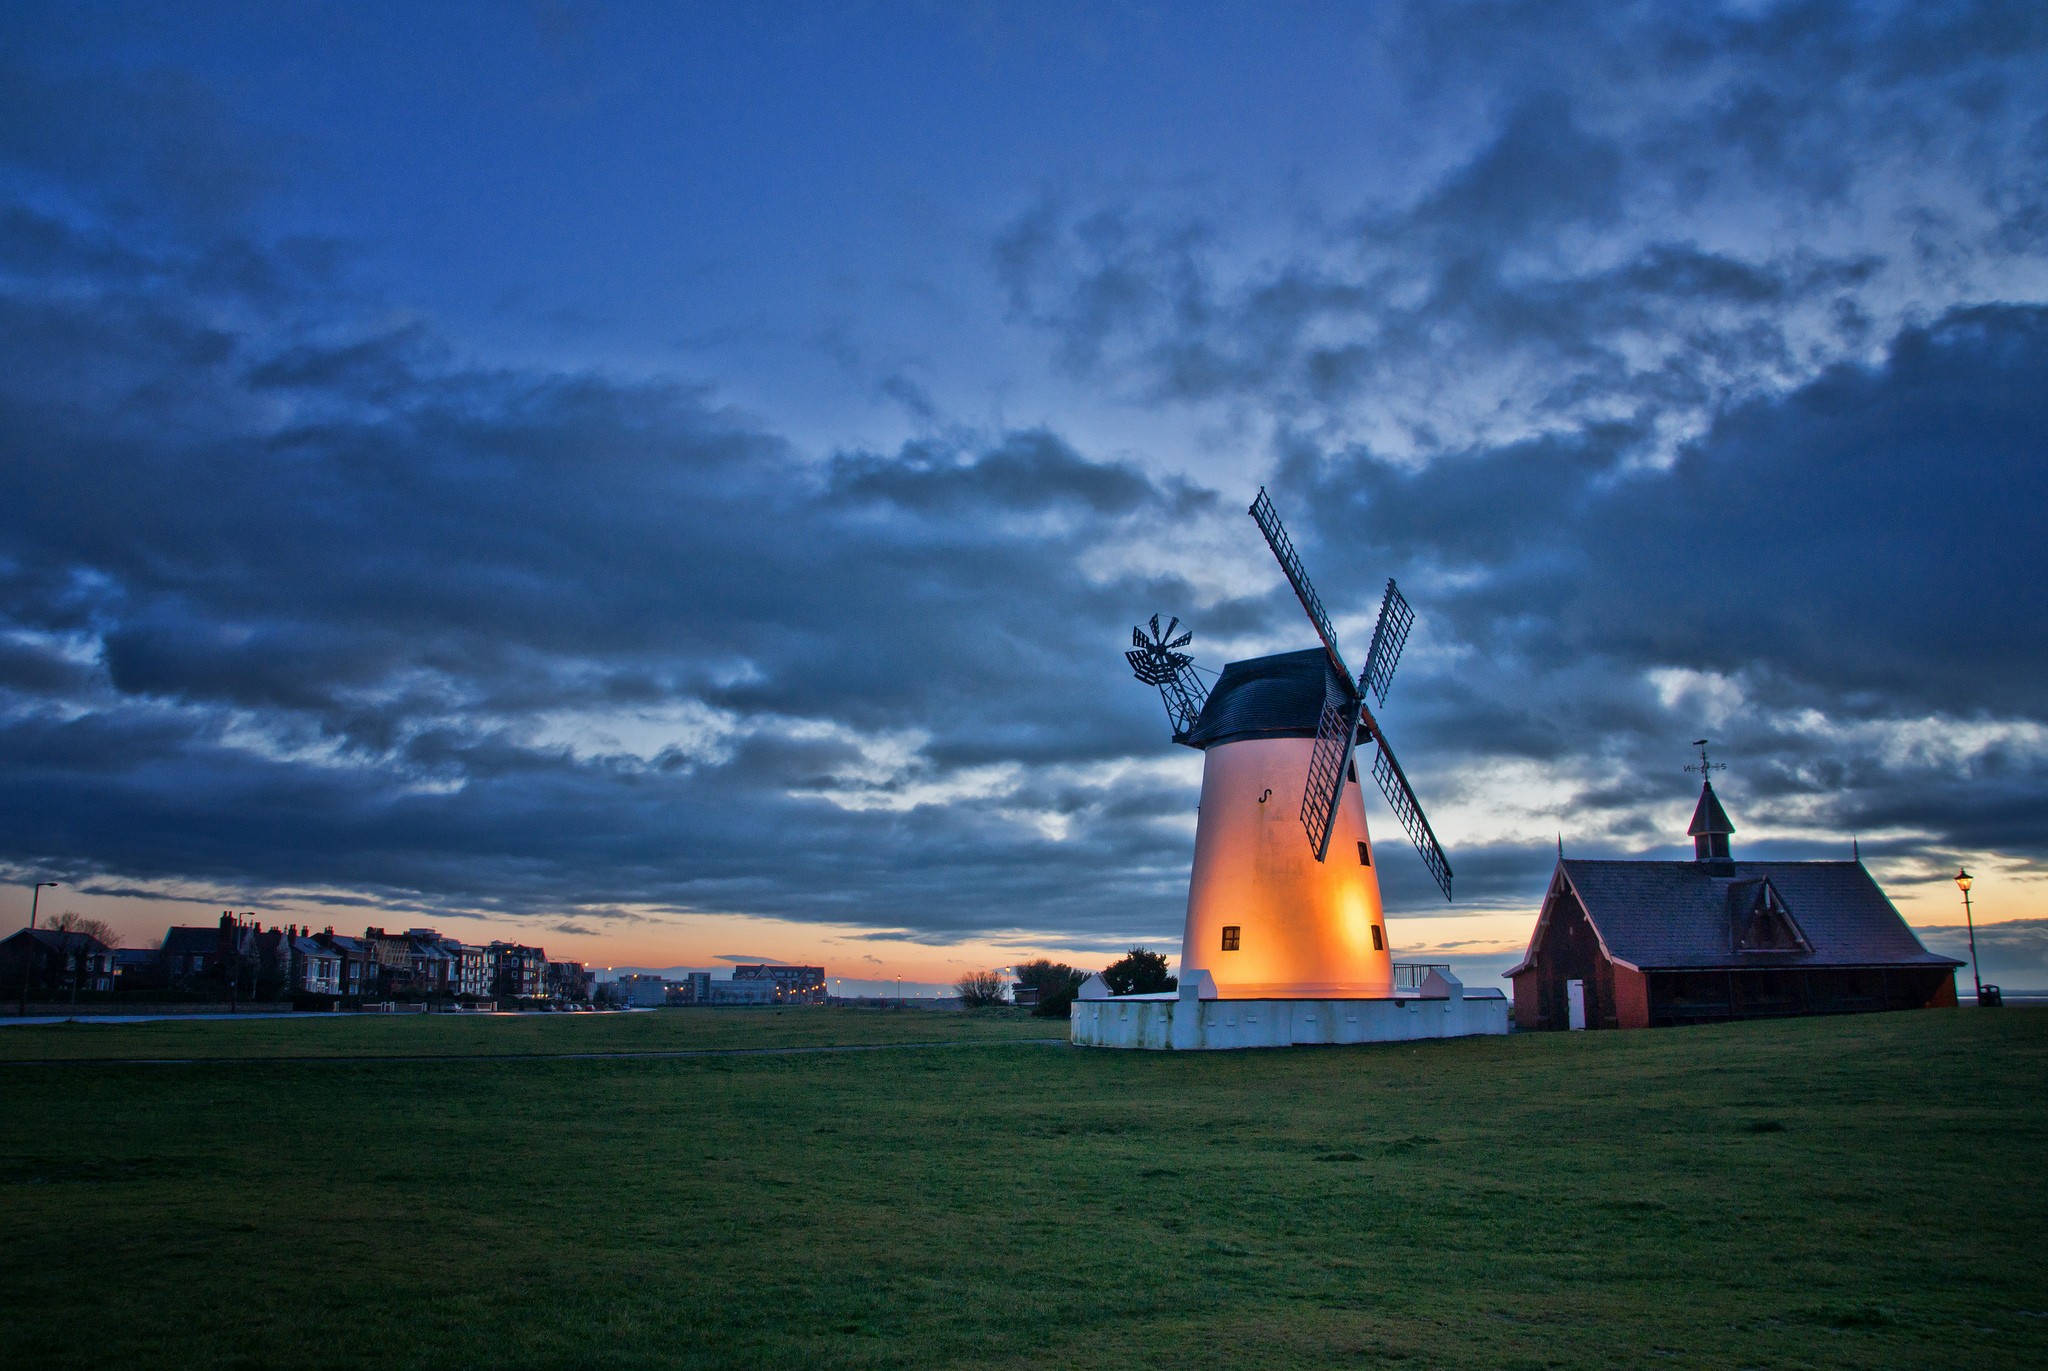 Hunsett Mill, Norfolk, England бесплатно